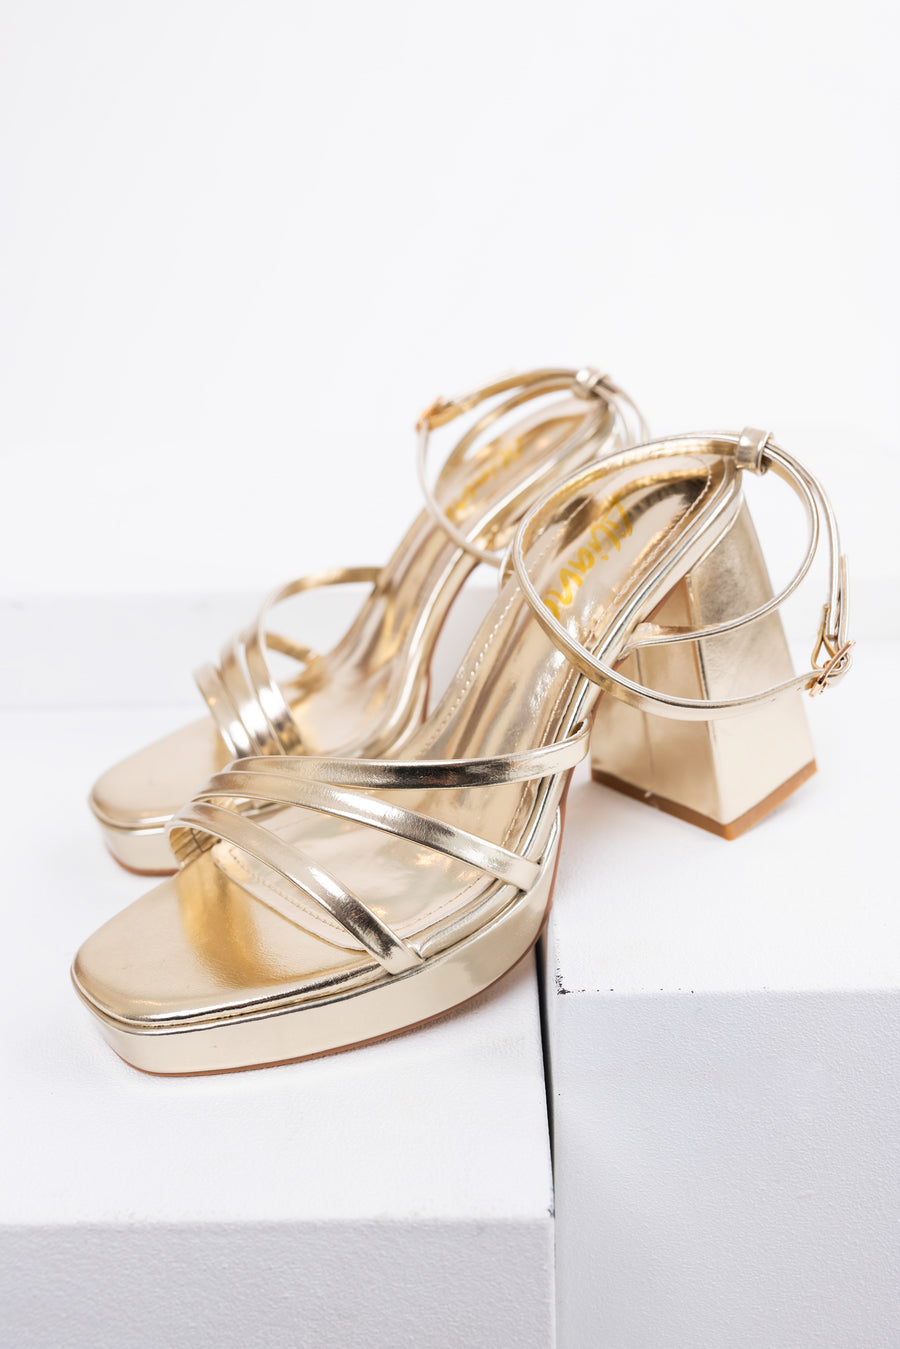 Gold Block Heel Strappy Dress Sandals